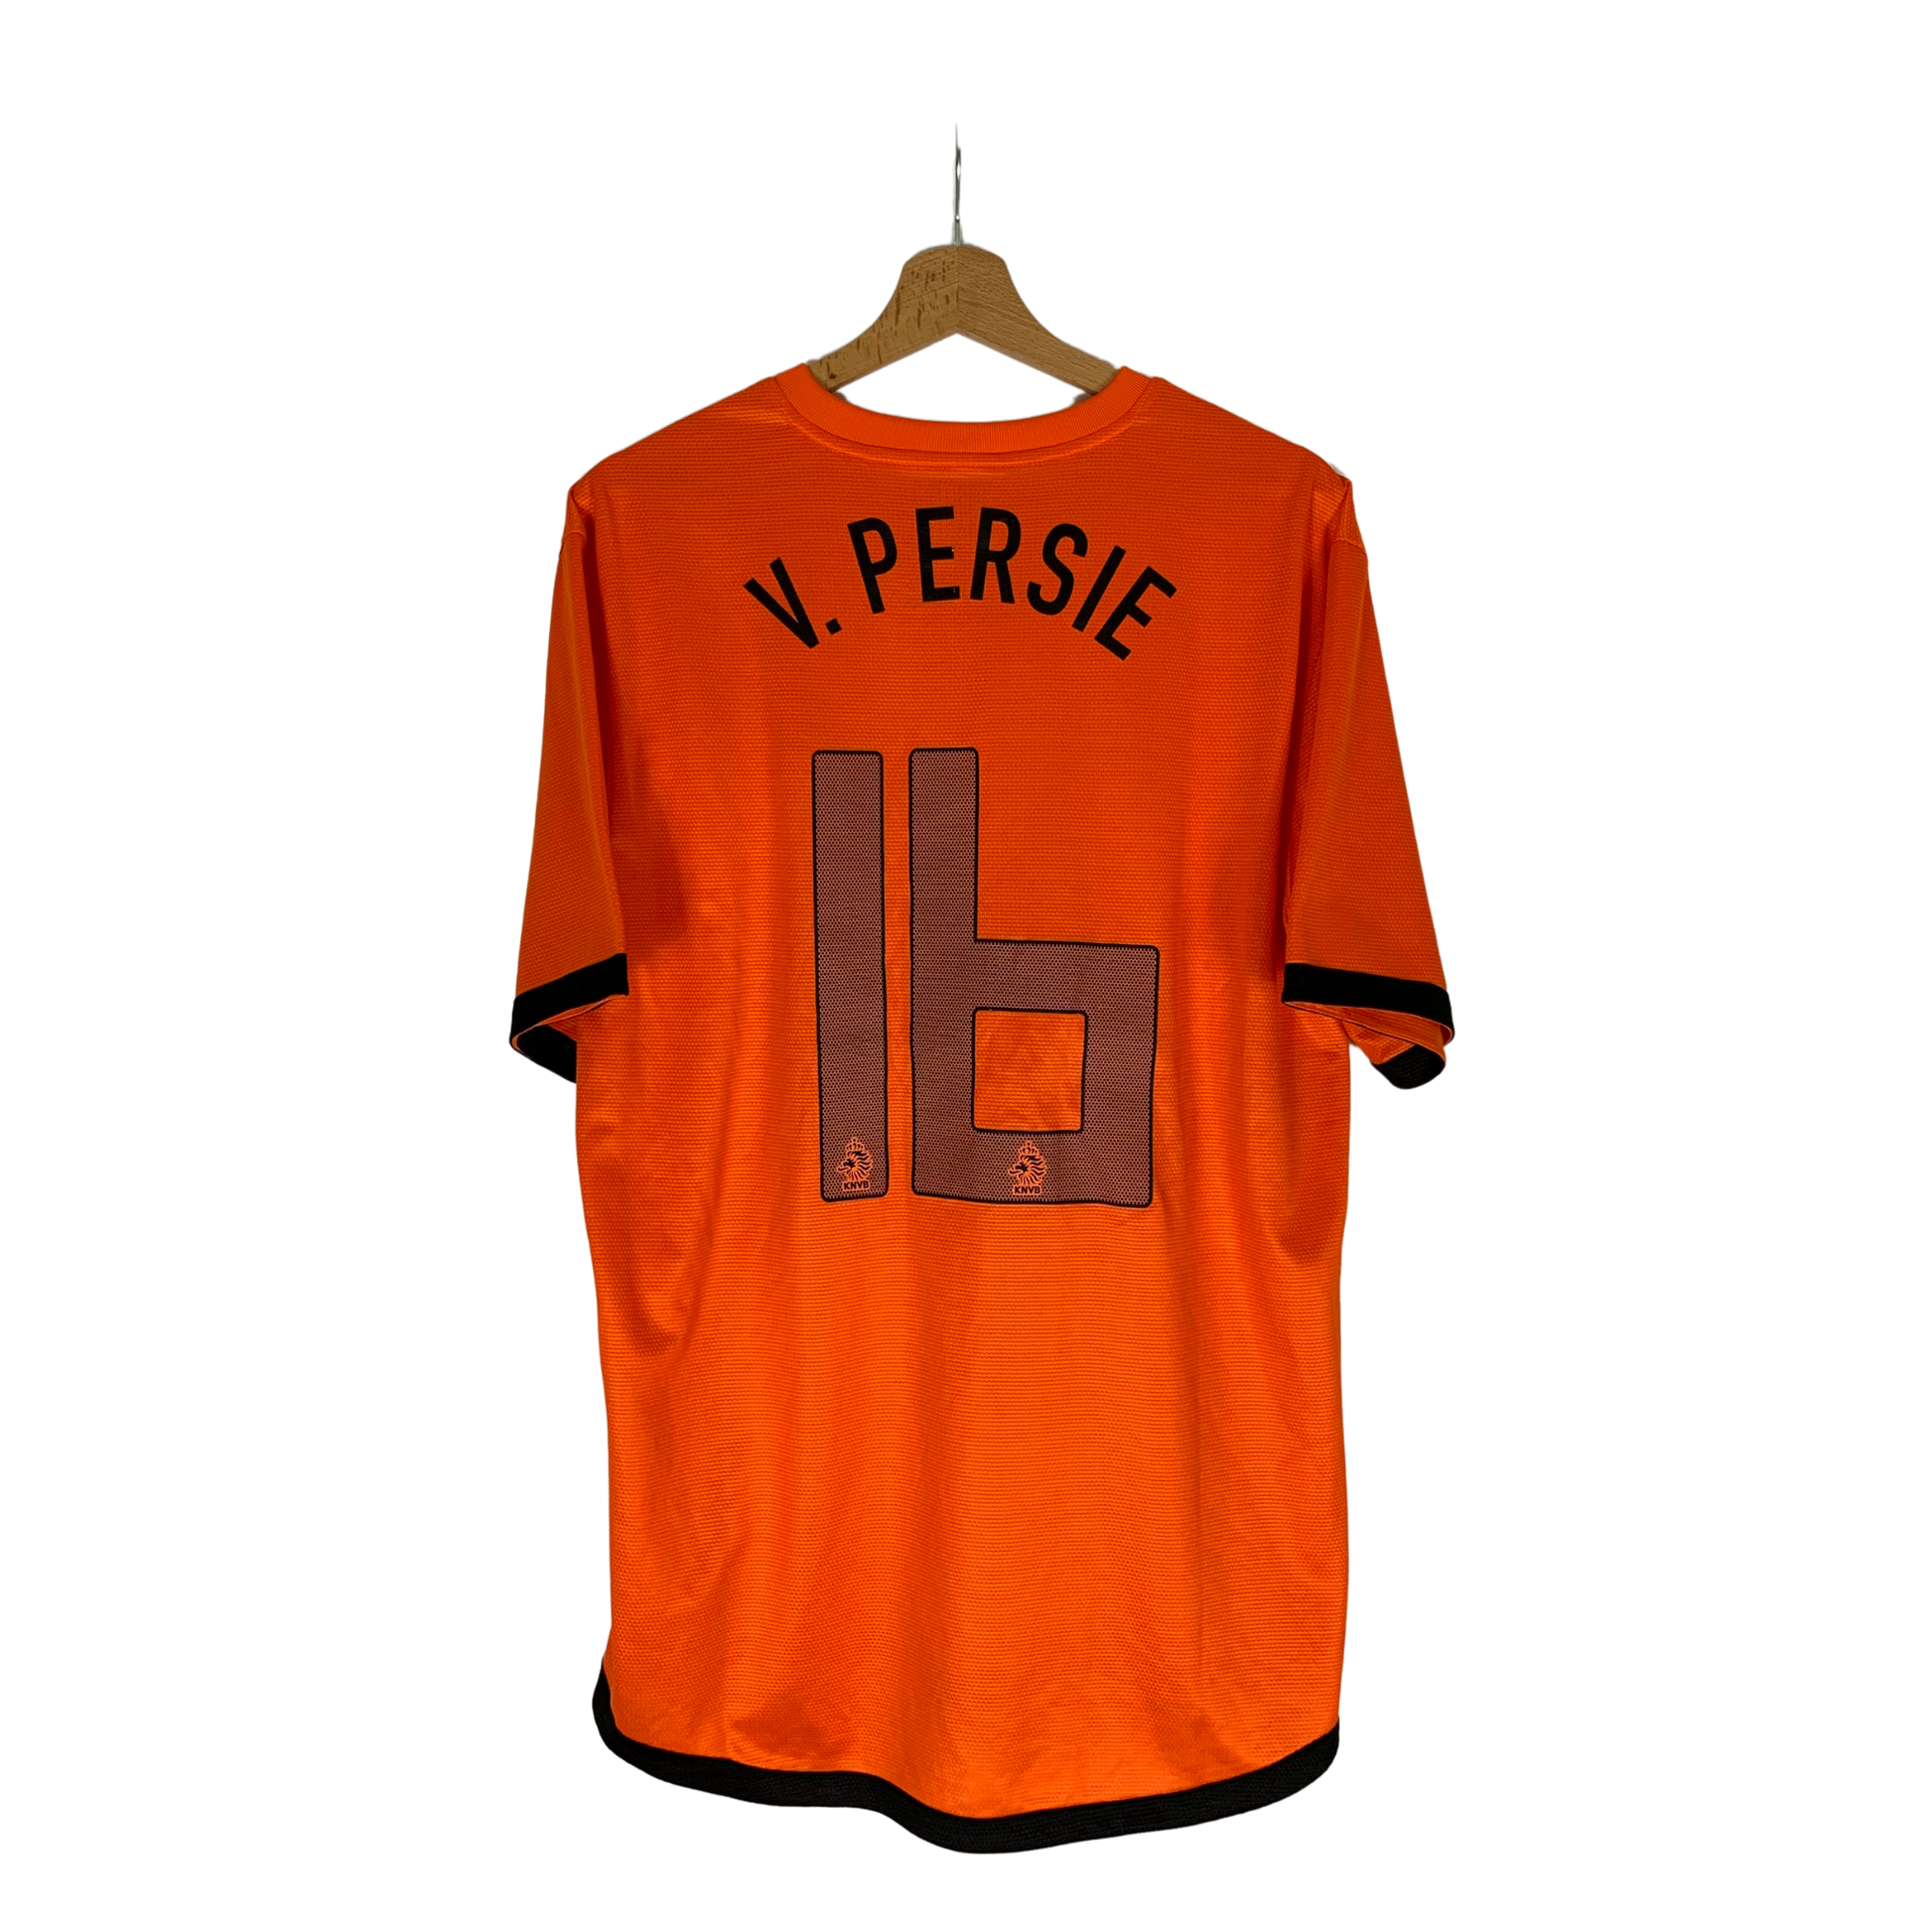 Classic Football Shirt The Netherlands season 2012 - Van Persie at InnoFoot 